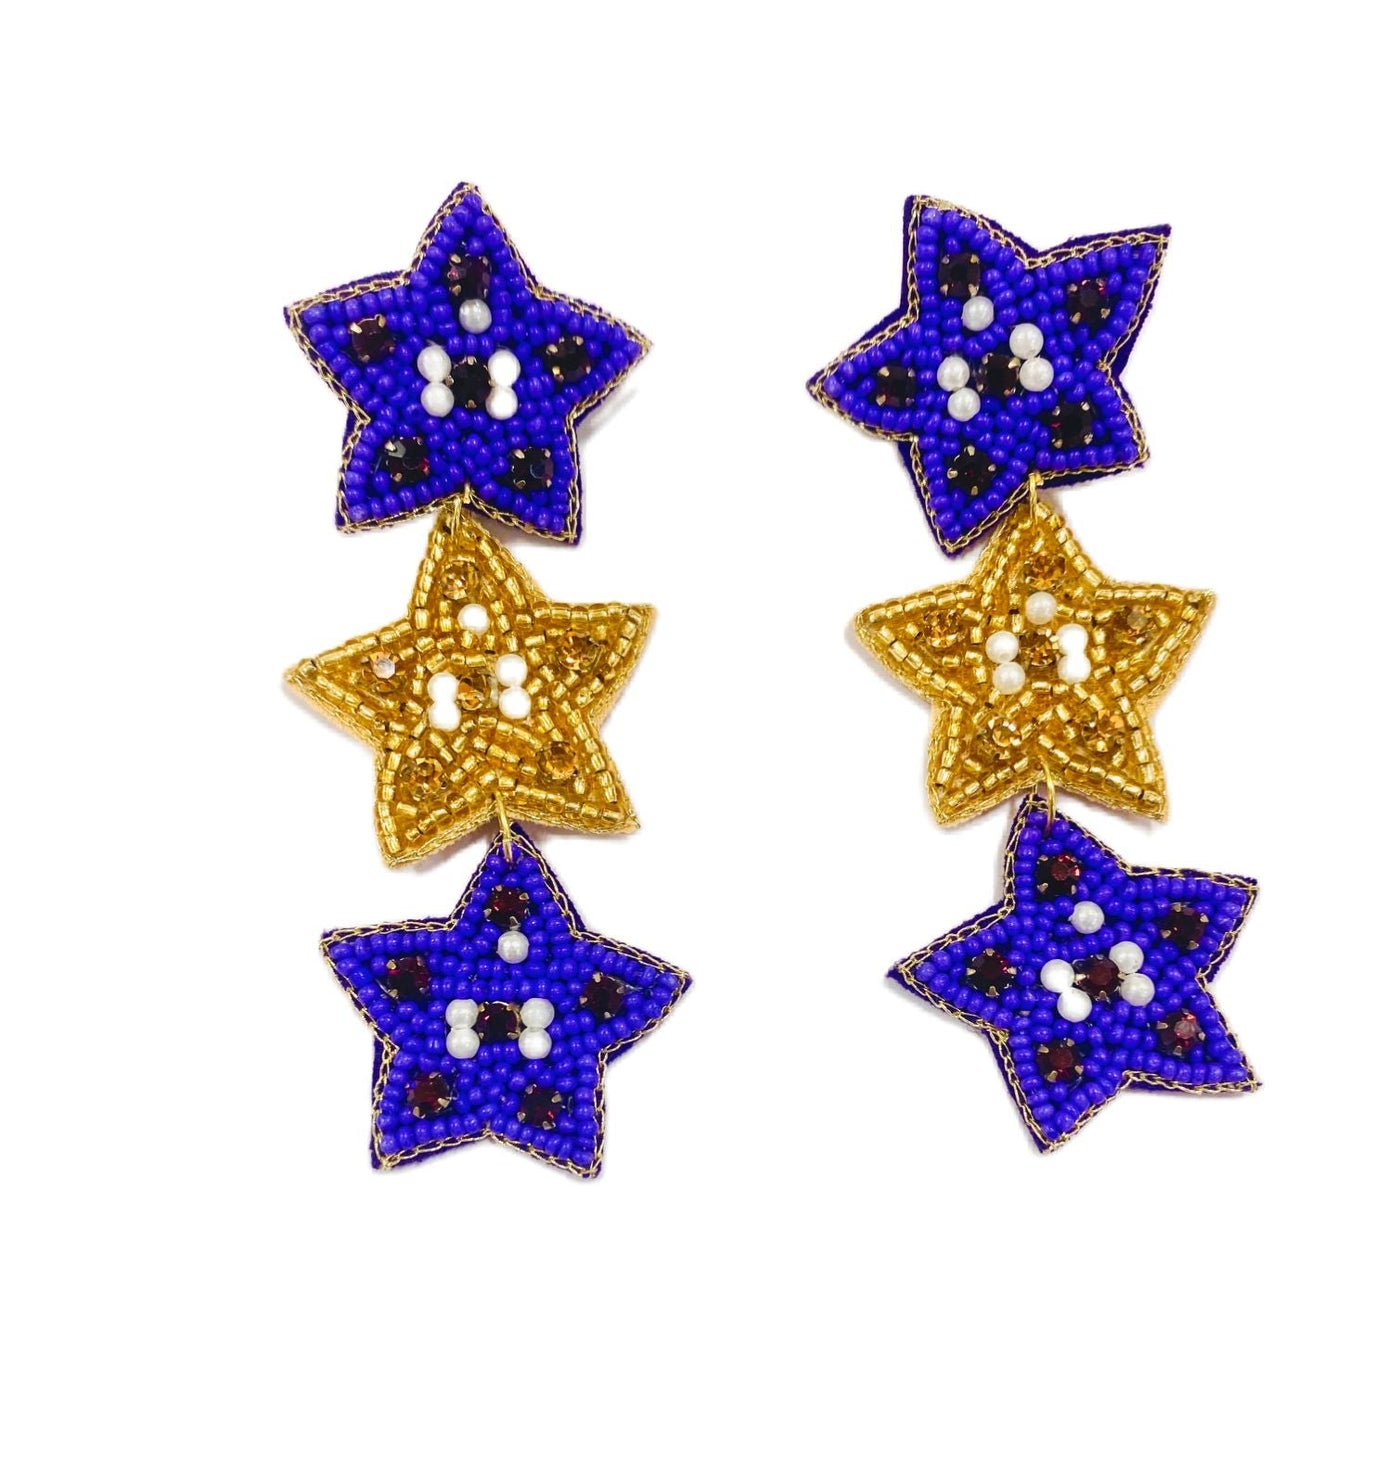 Triple Star Earrings - Purple and Gold